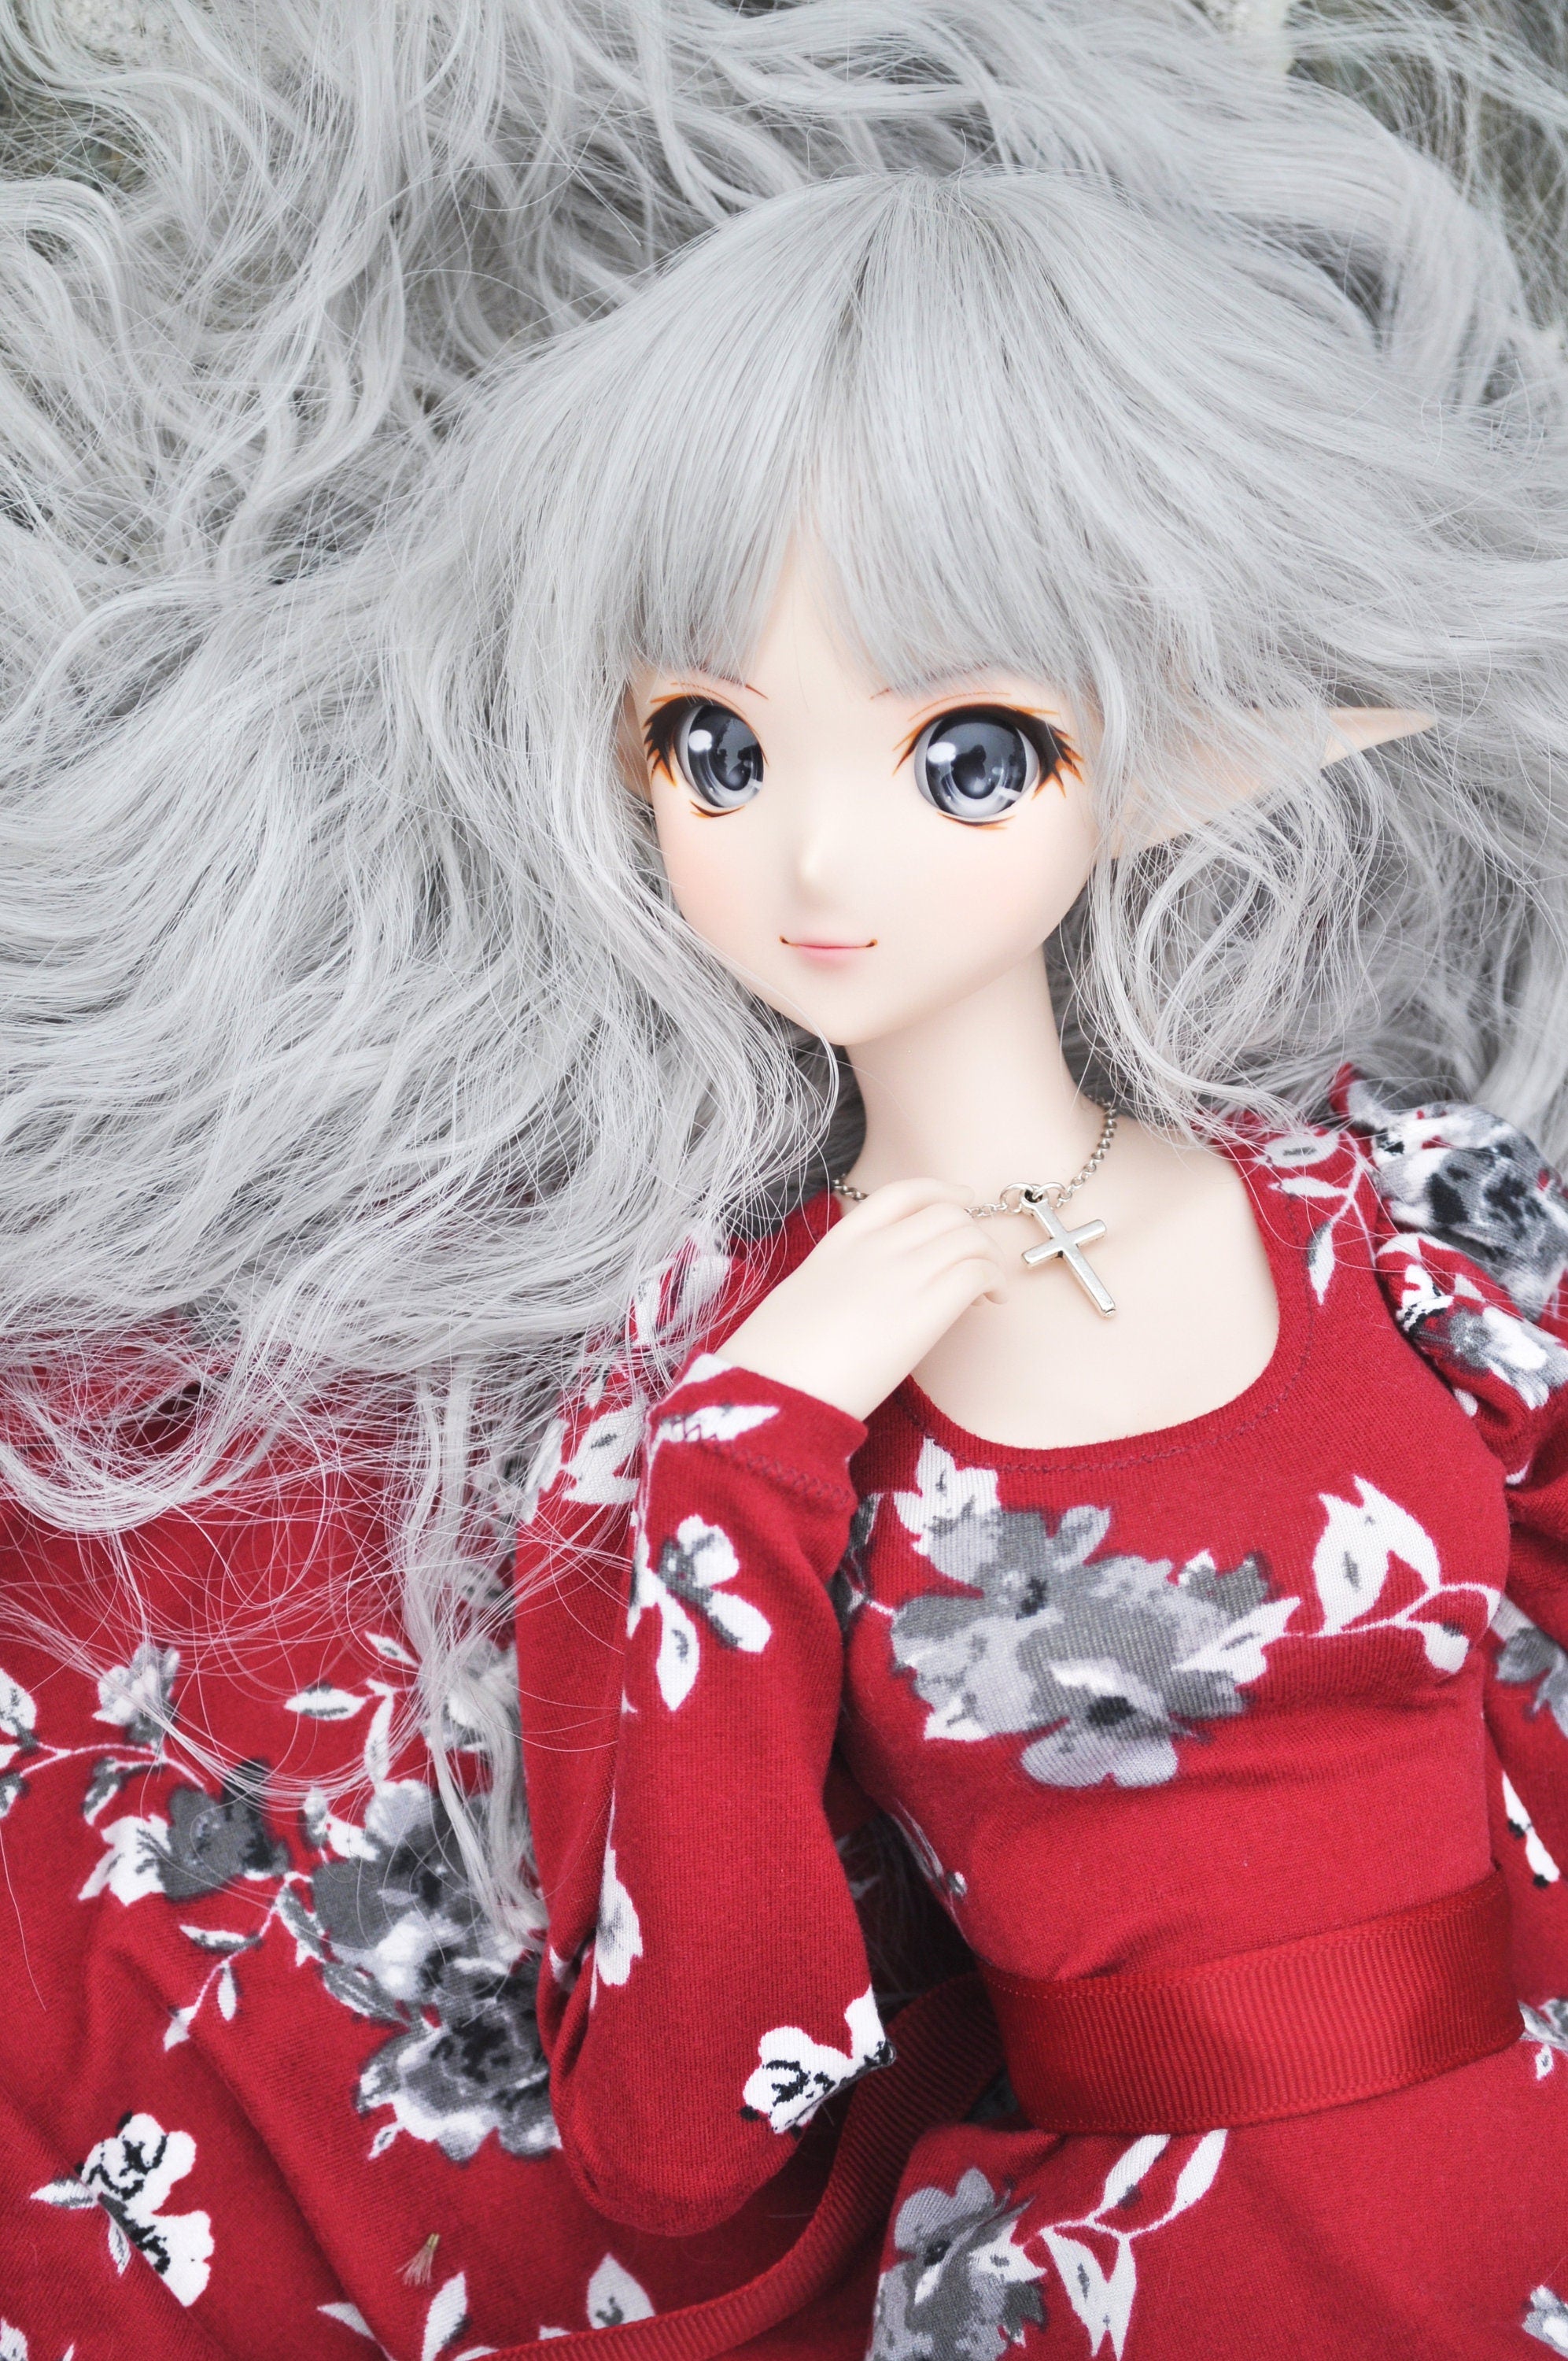 Custom doll Wig for Smart Dolls- Heat Safe - Tangle Resistant- 8.5" head size of Bjd, SD, Dollfie Dream dolls Silver Limited